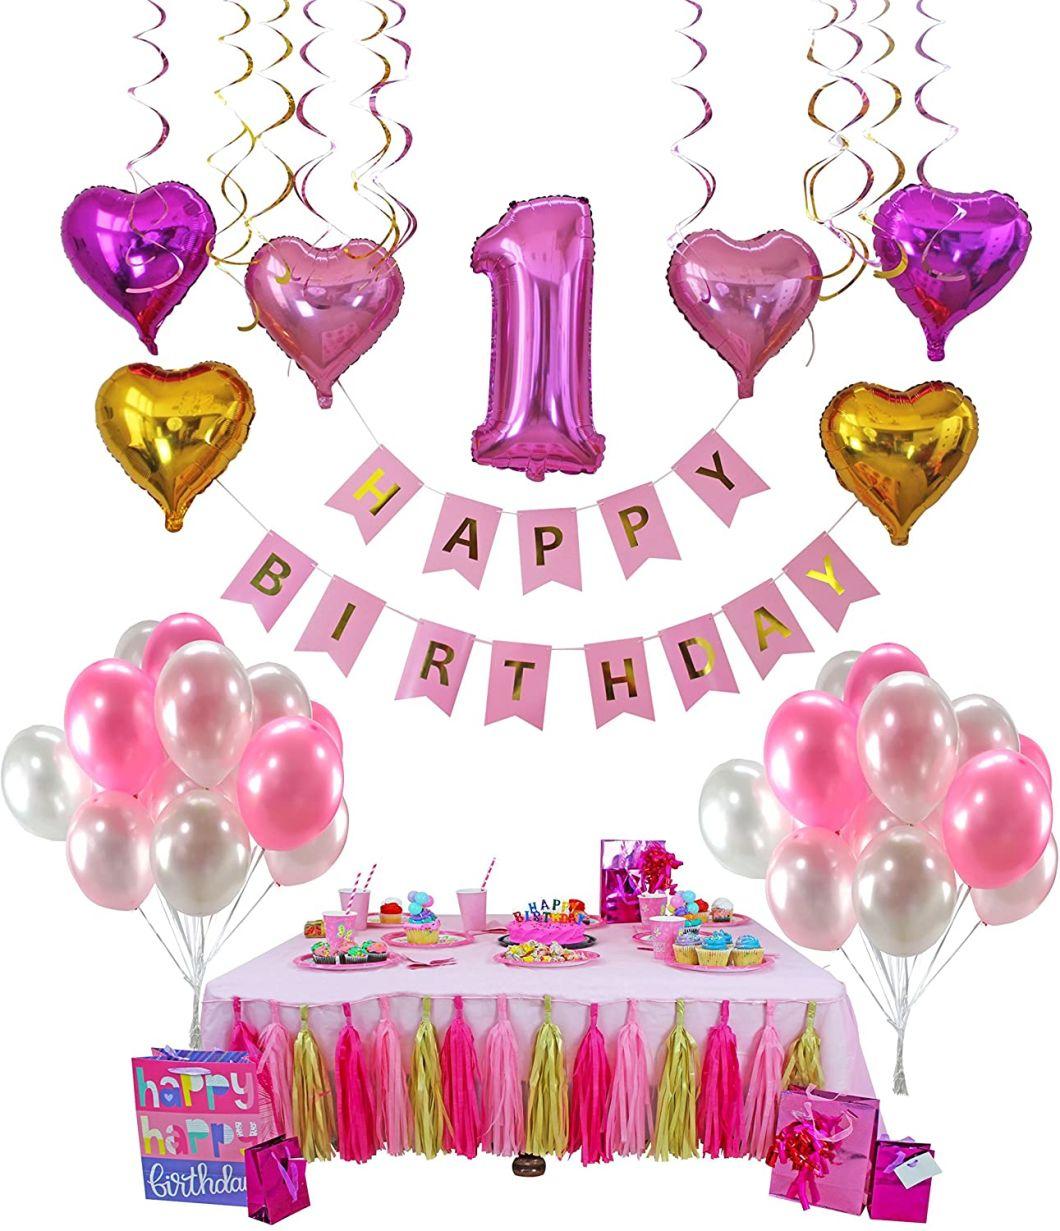 Birthday Party Decoration Set Pink Gold Paper Lantern POM Poms Garland Happy Birthday Bunting Banner Decorations Set